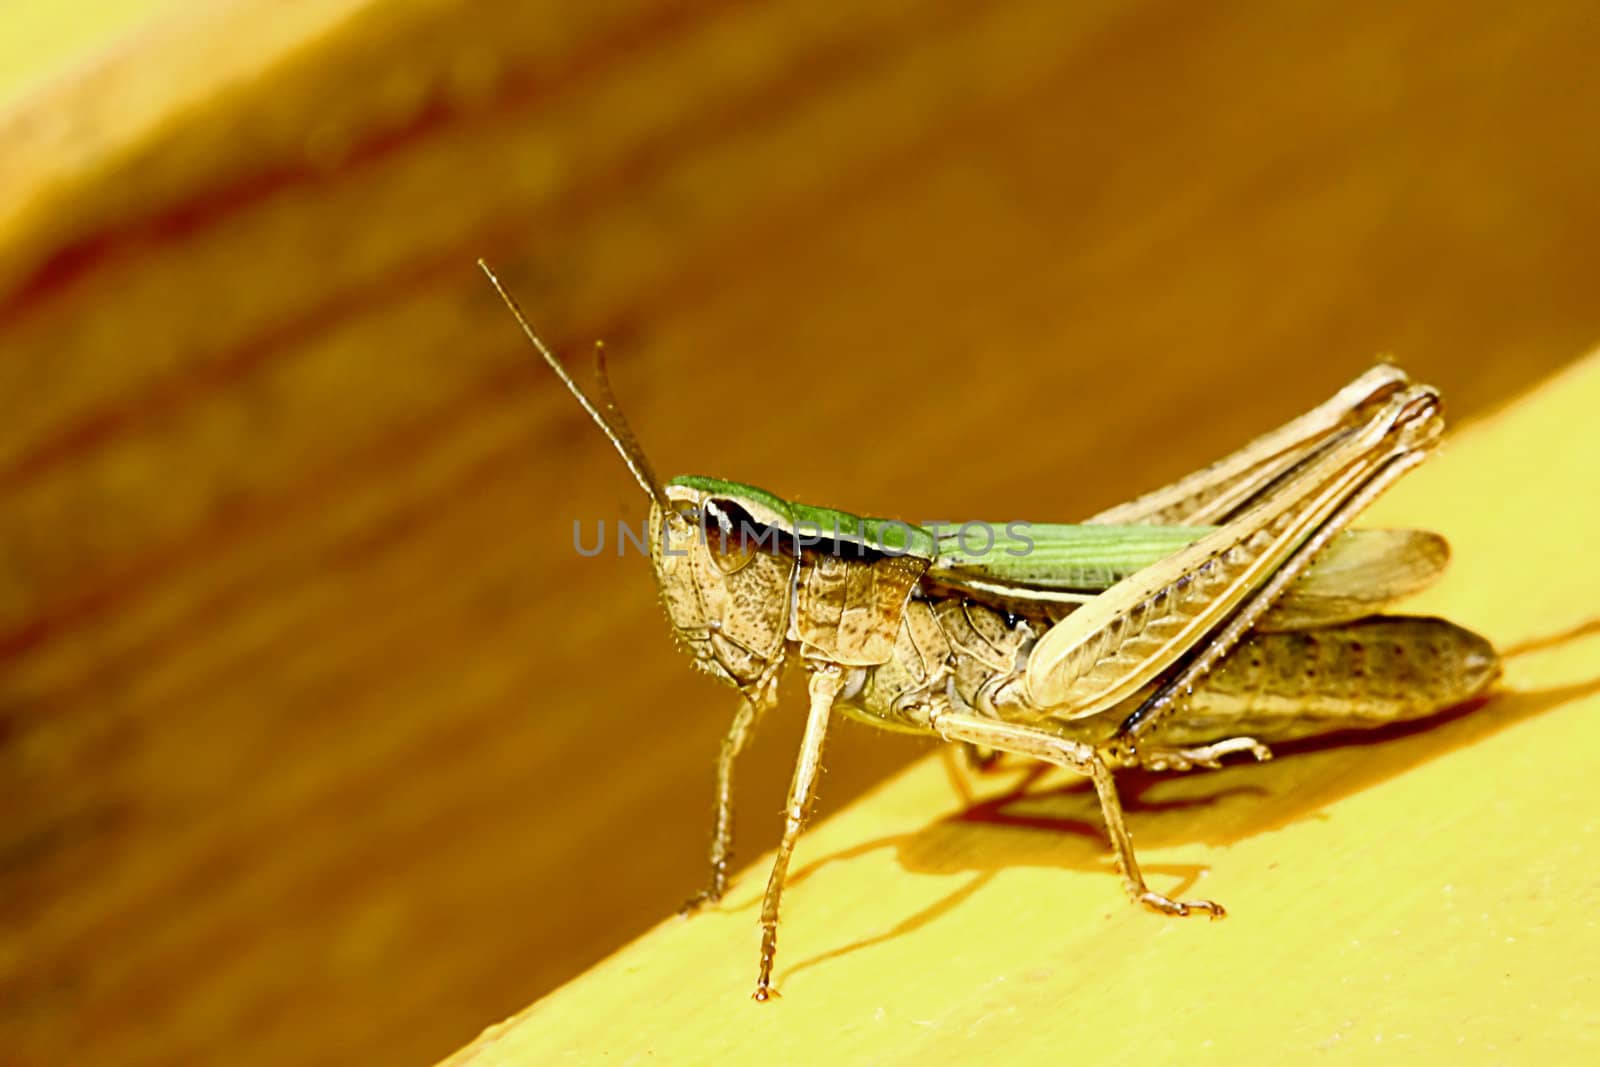 Grasshopper. Get ready to jump.